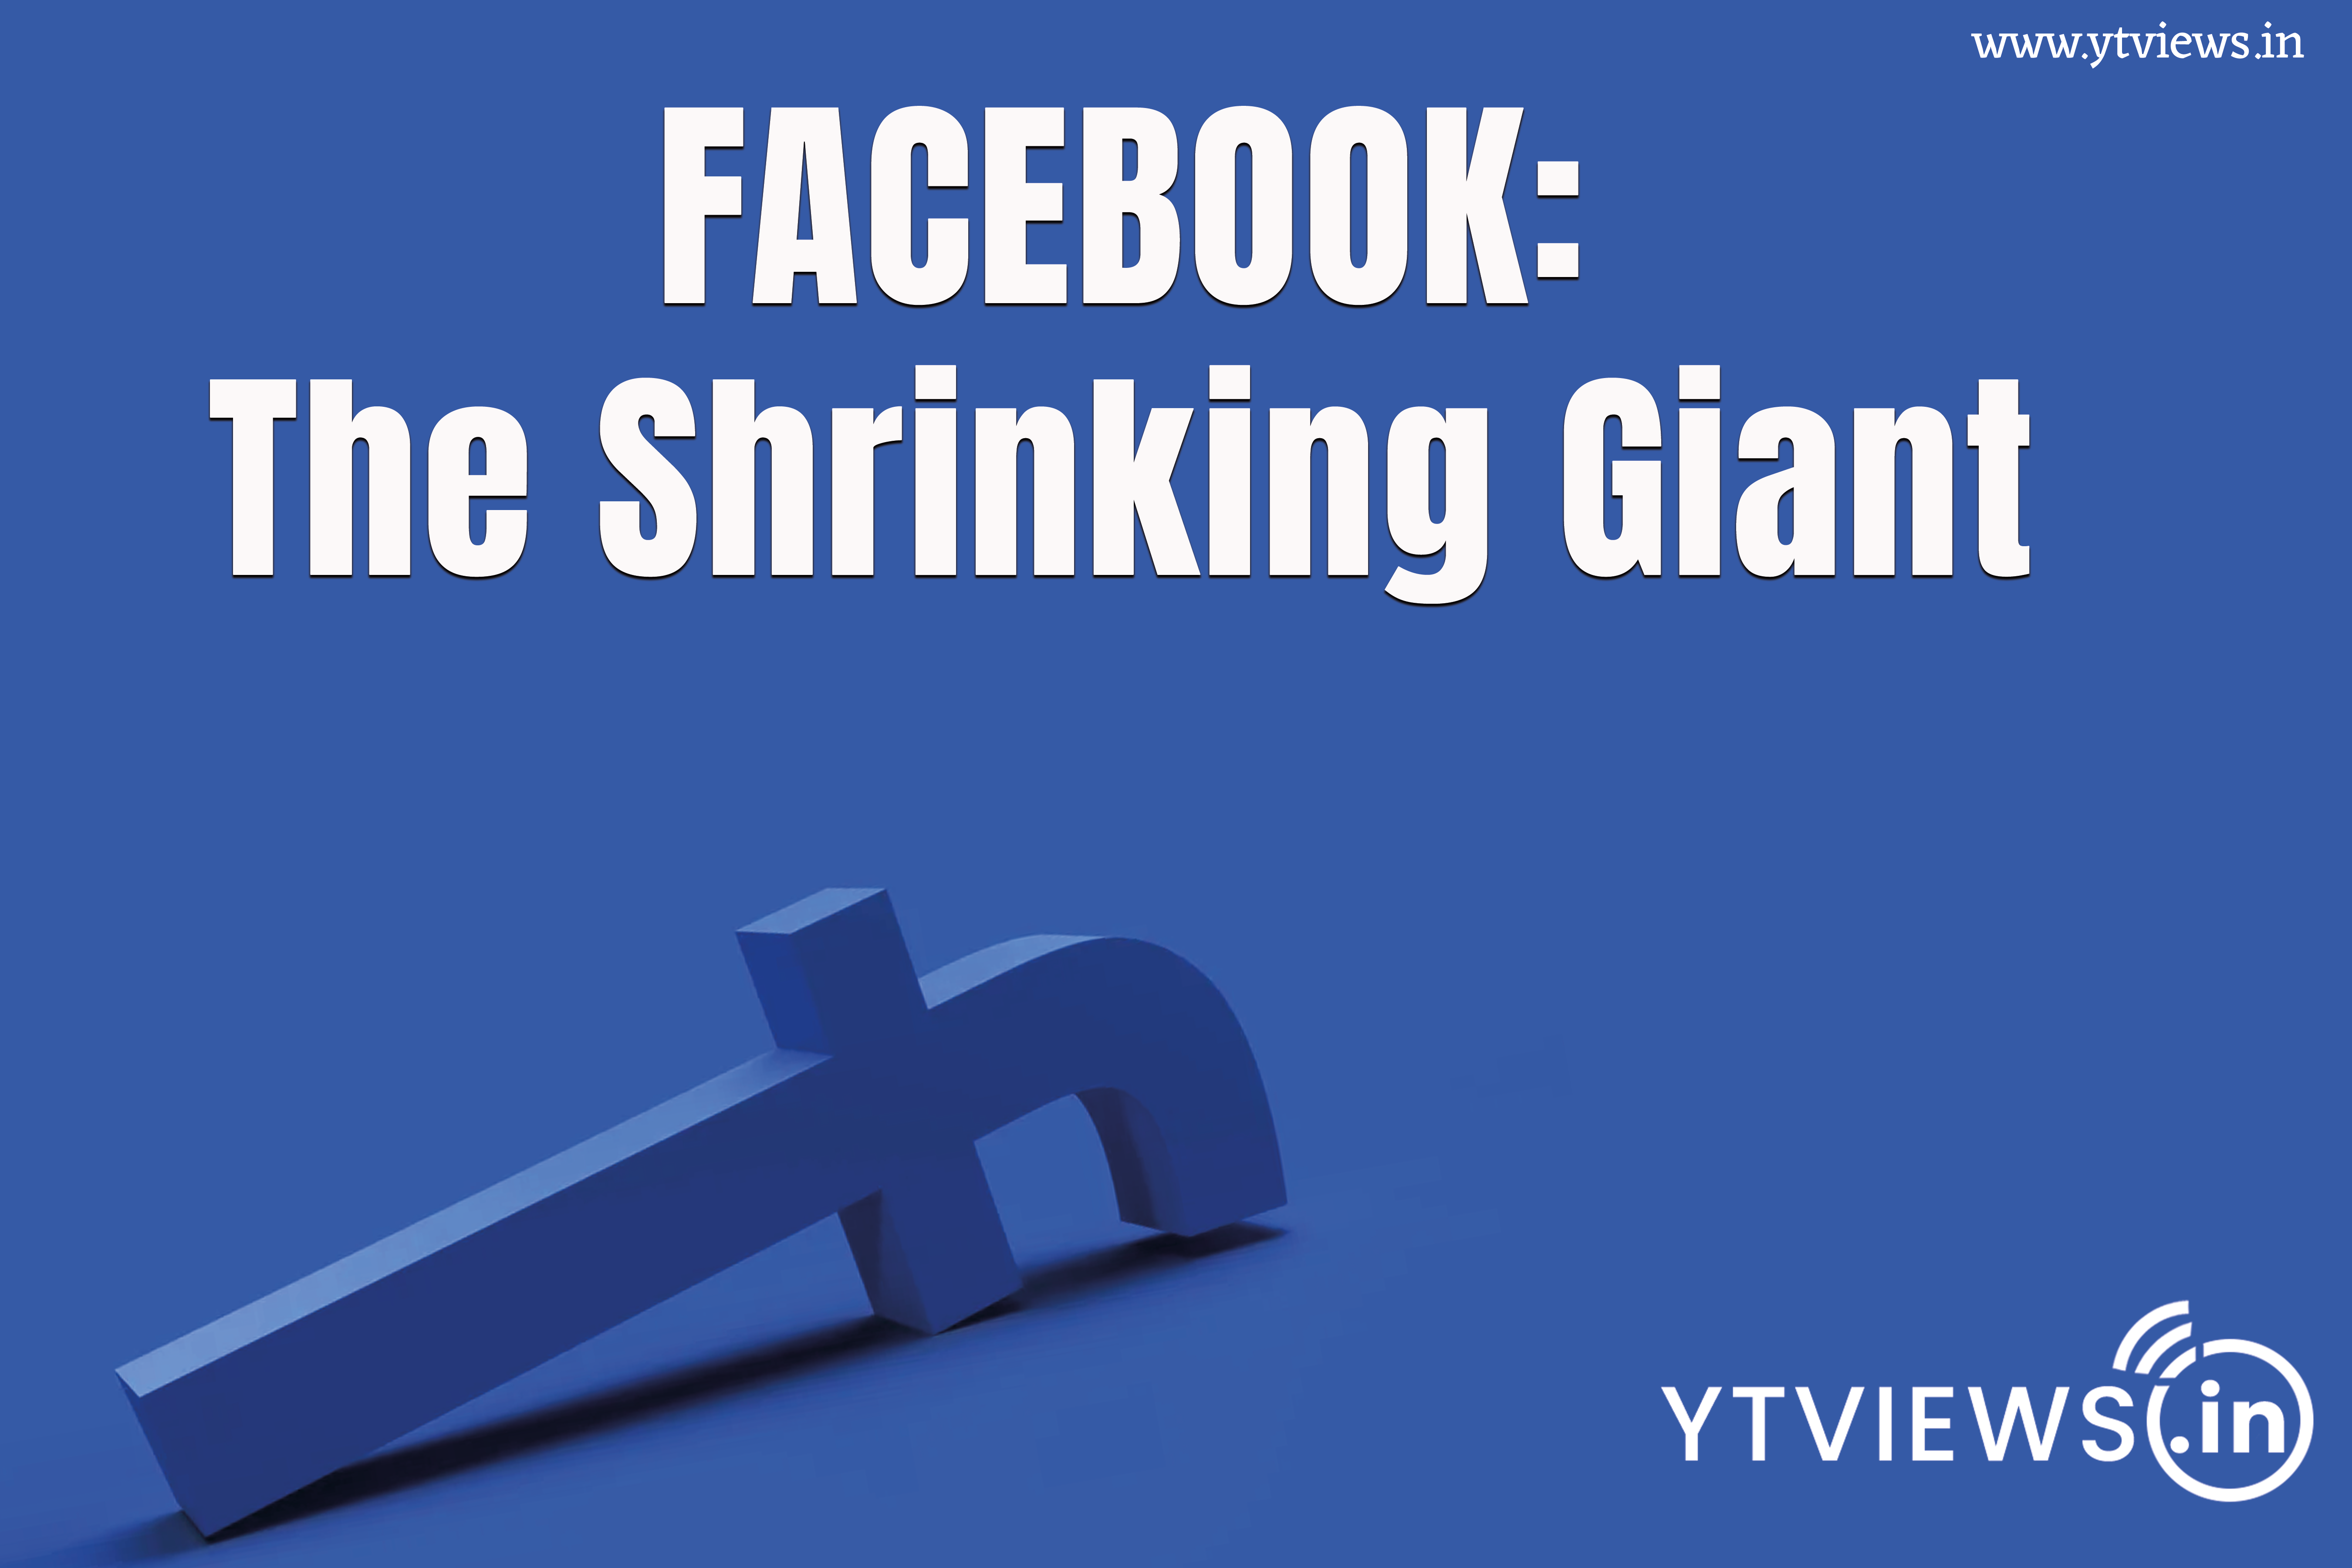 Facebook: The shrinking giant